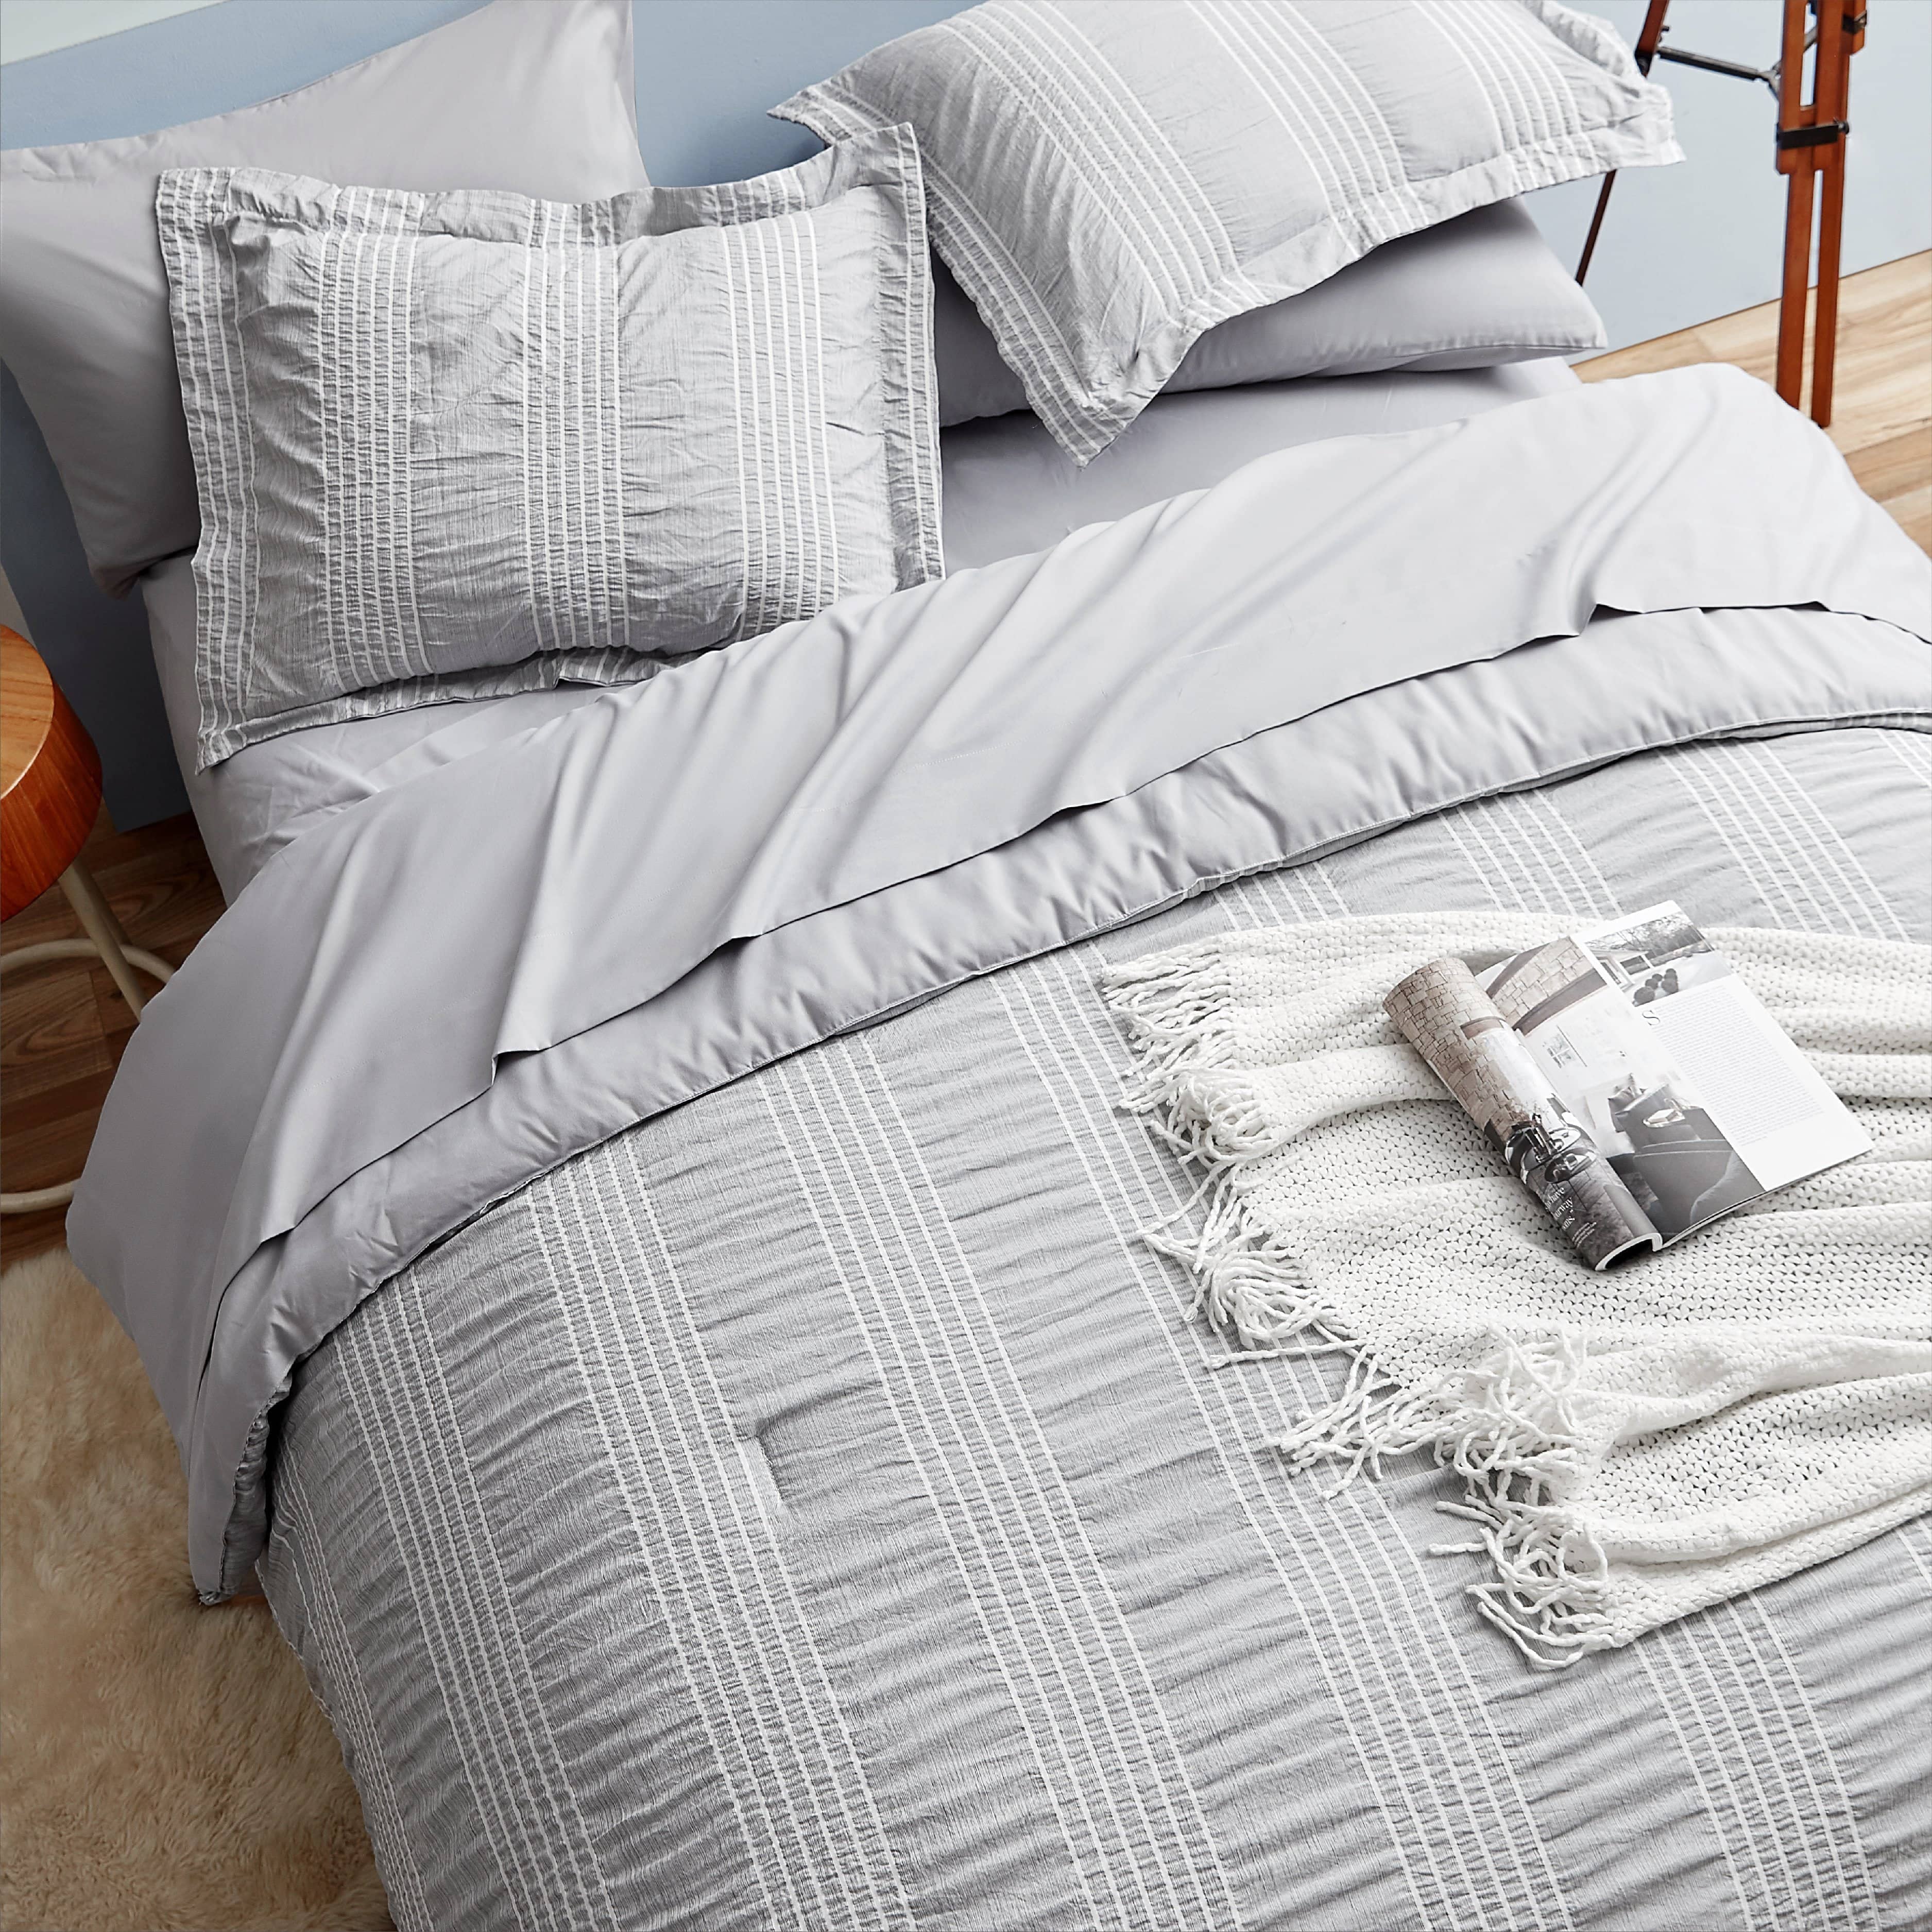 Bedsure | Seersucker Comforter Set - Striped Bed in A Bag grey soft fabric